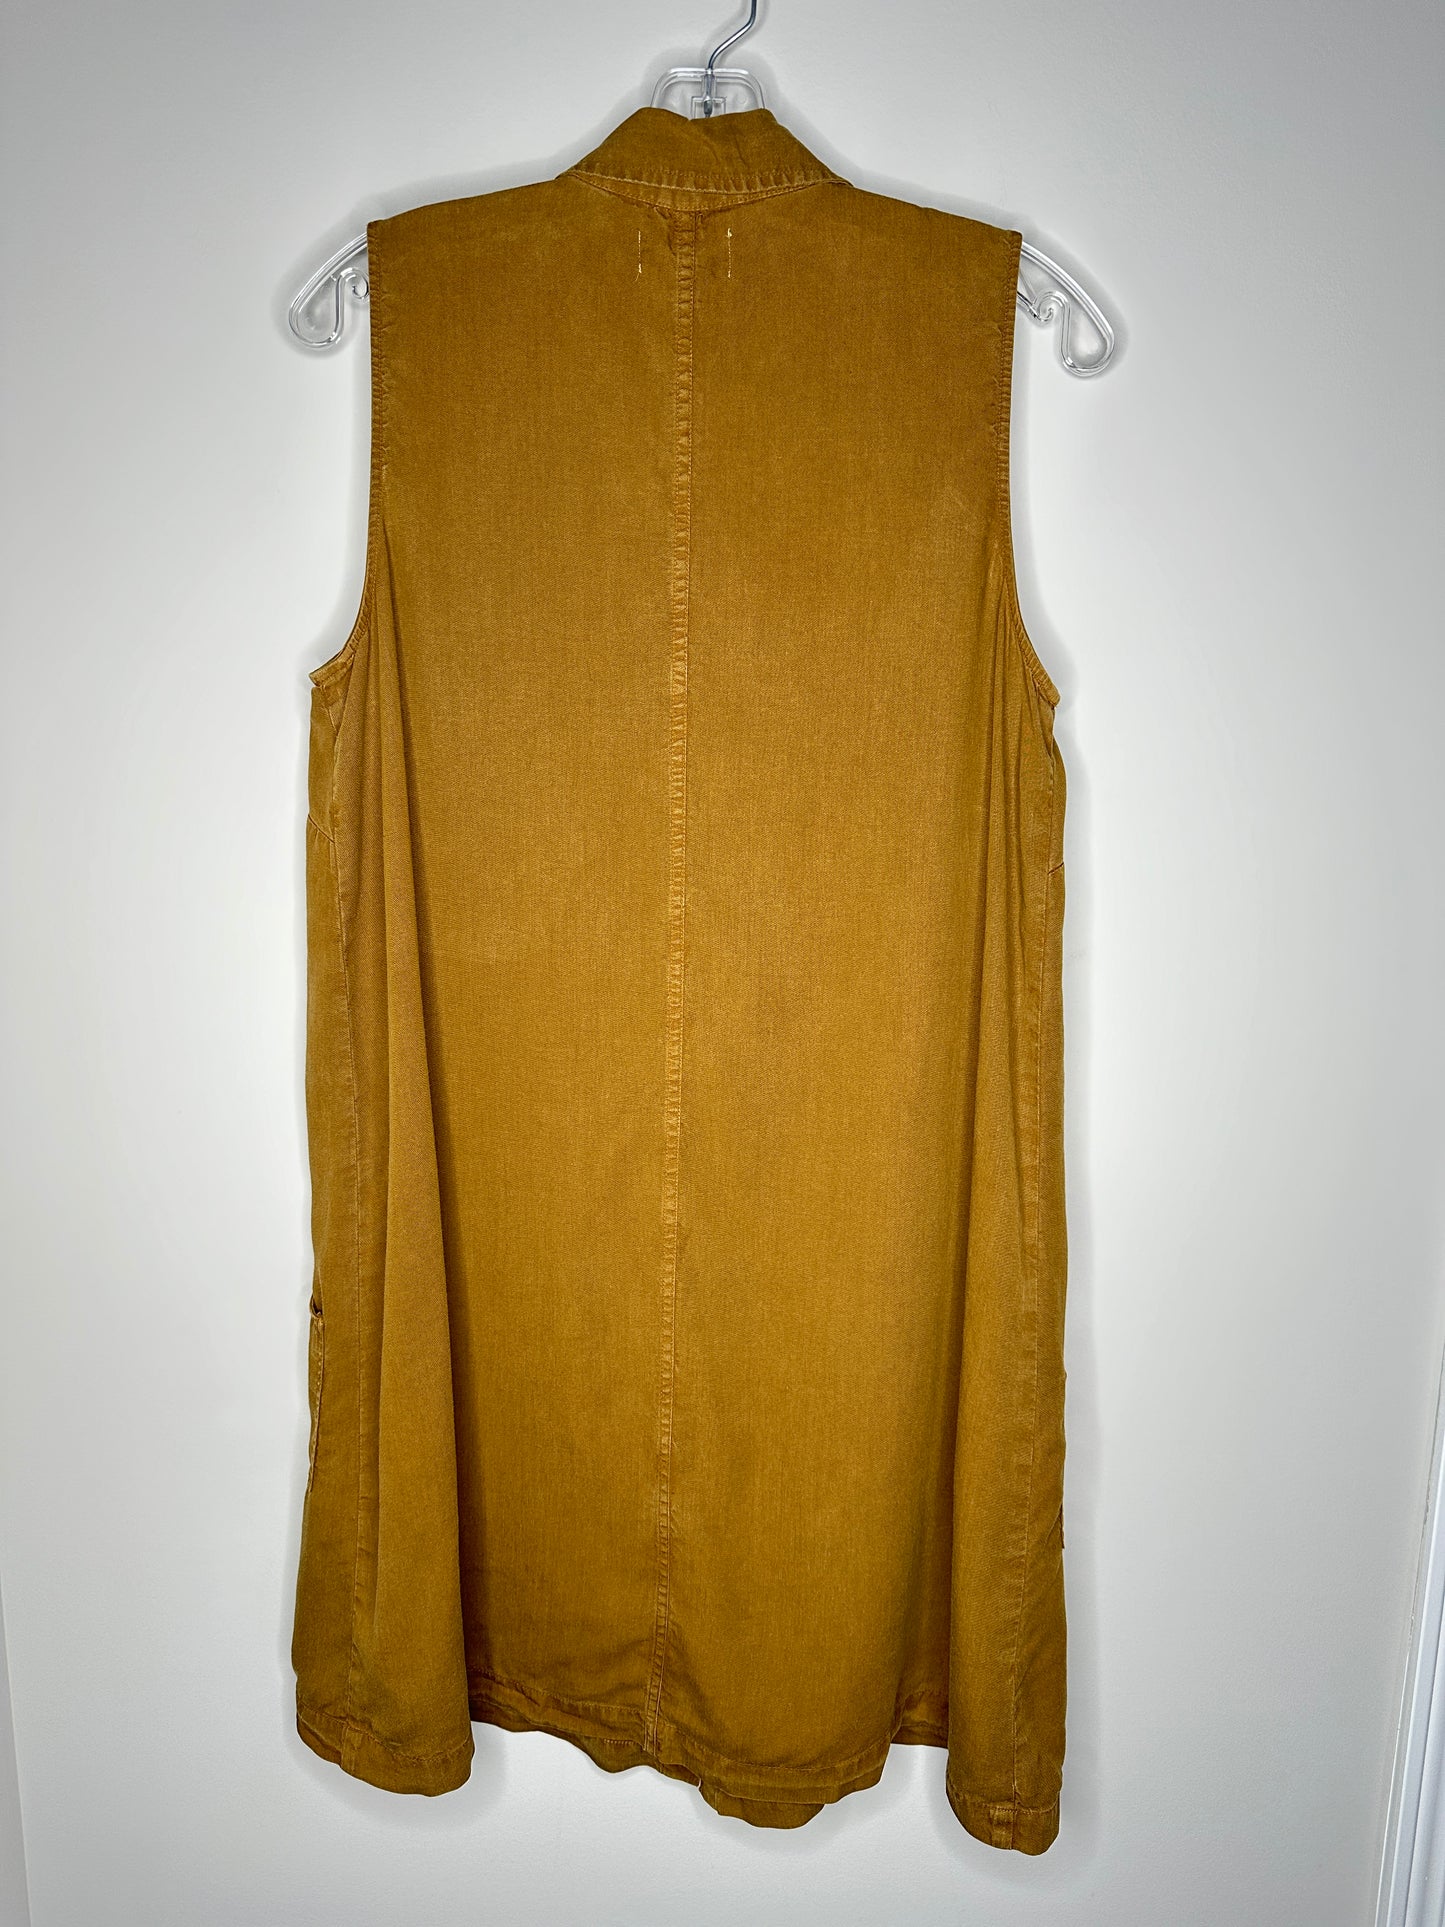 Lou & Grey Size M Brown Sleeveless Shift Button-Up Shirt Dress